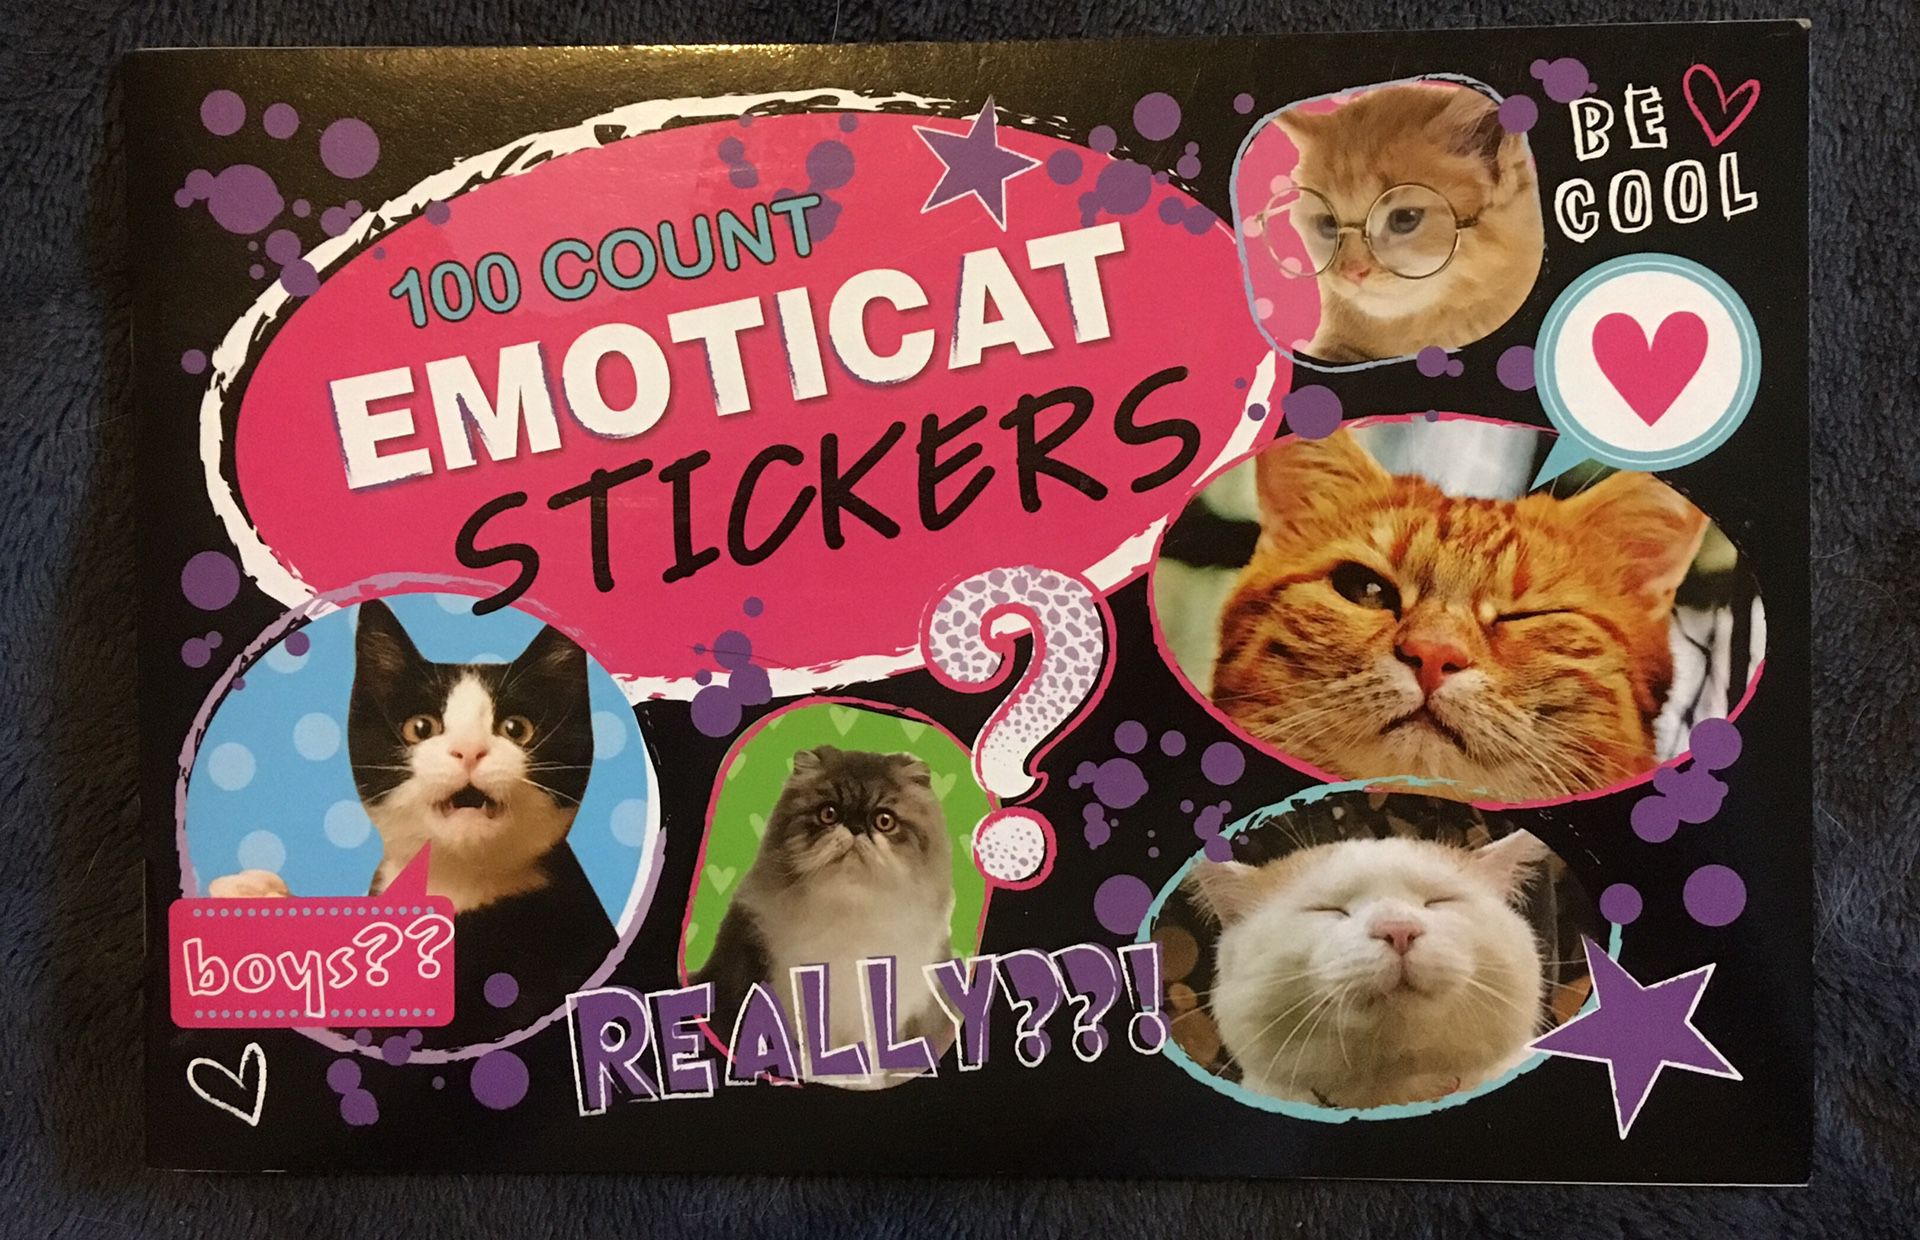 Emoticat Stickers-100 count